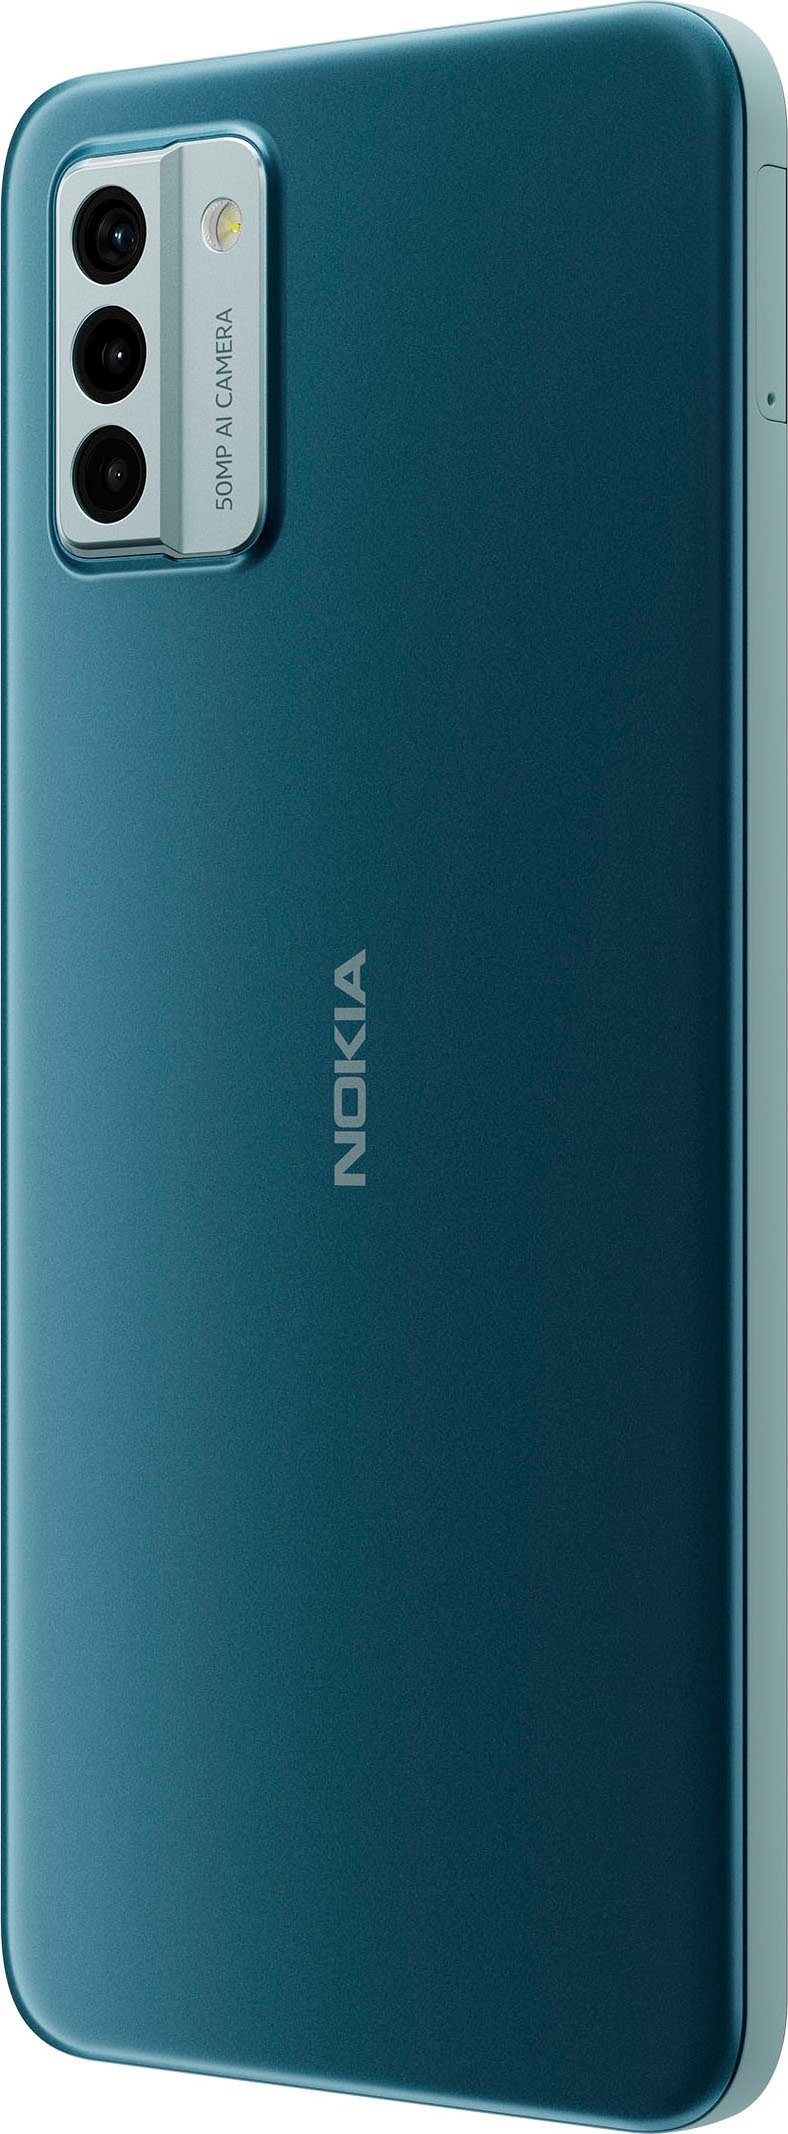 Nokia G22 Smartphone Speicherplatz, Kamera) GB (16,56 Zoll, 64 cm/6,52 MP Blue 50 Lagoon